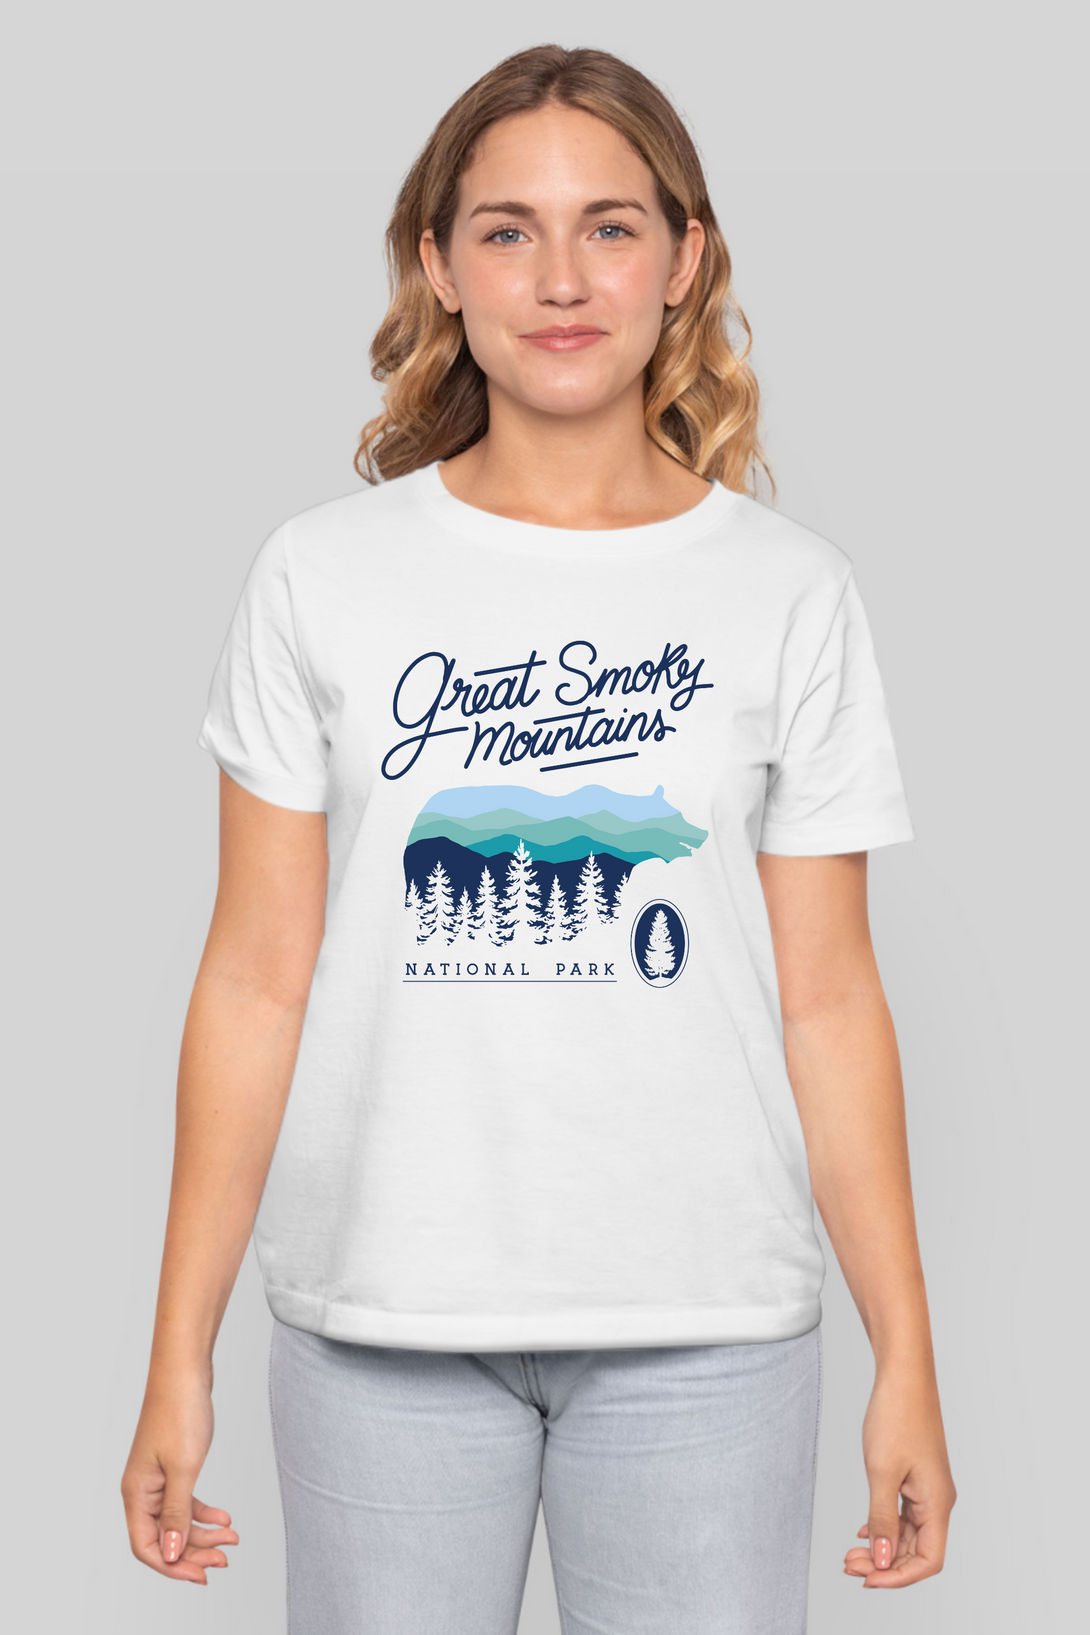 Smoky Summit Printed T-Shirt For Women - WowWaves - 7